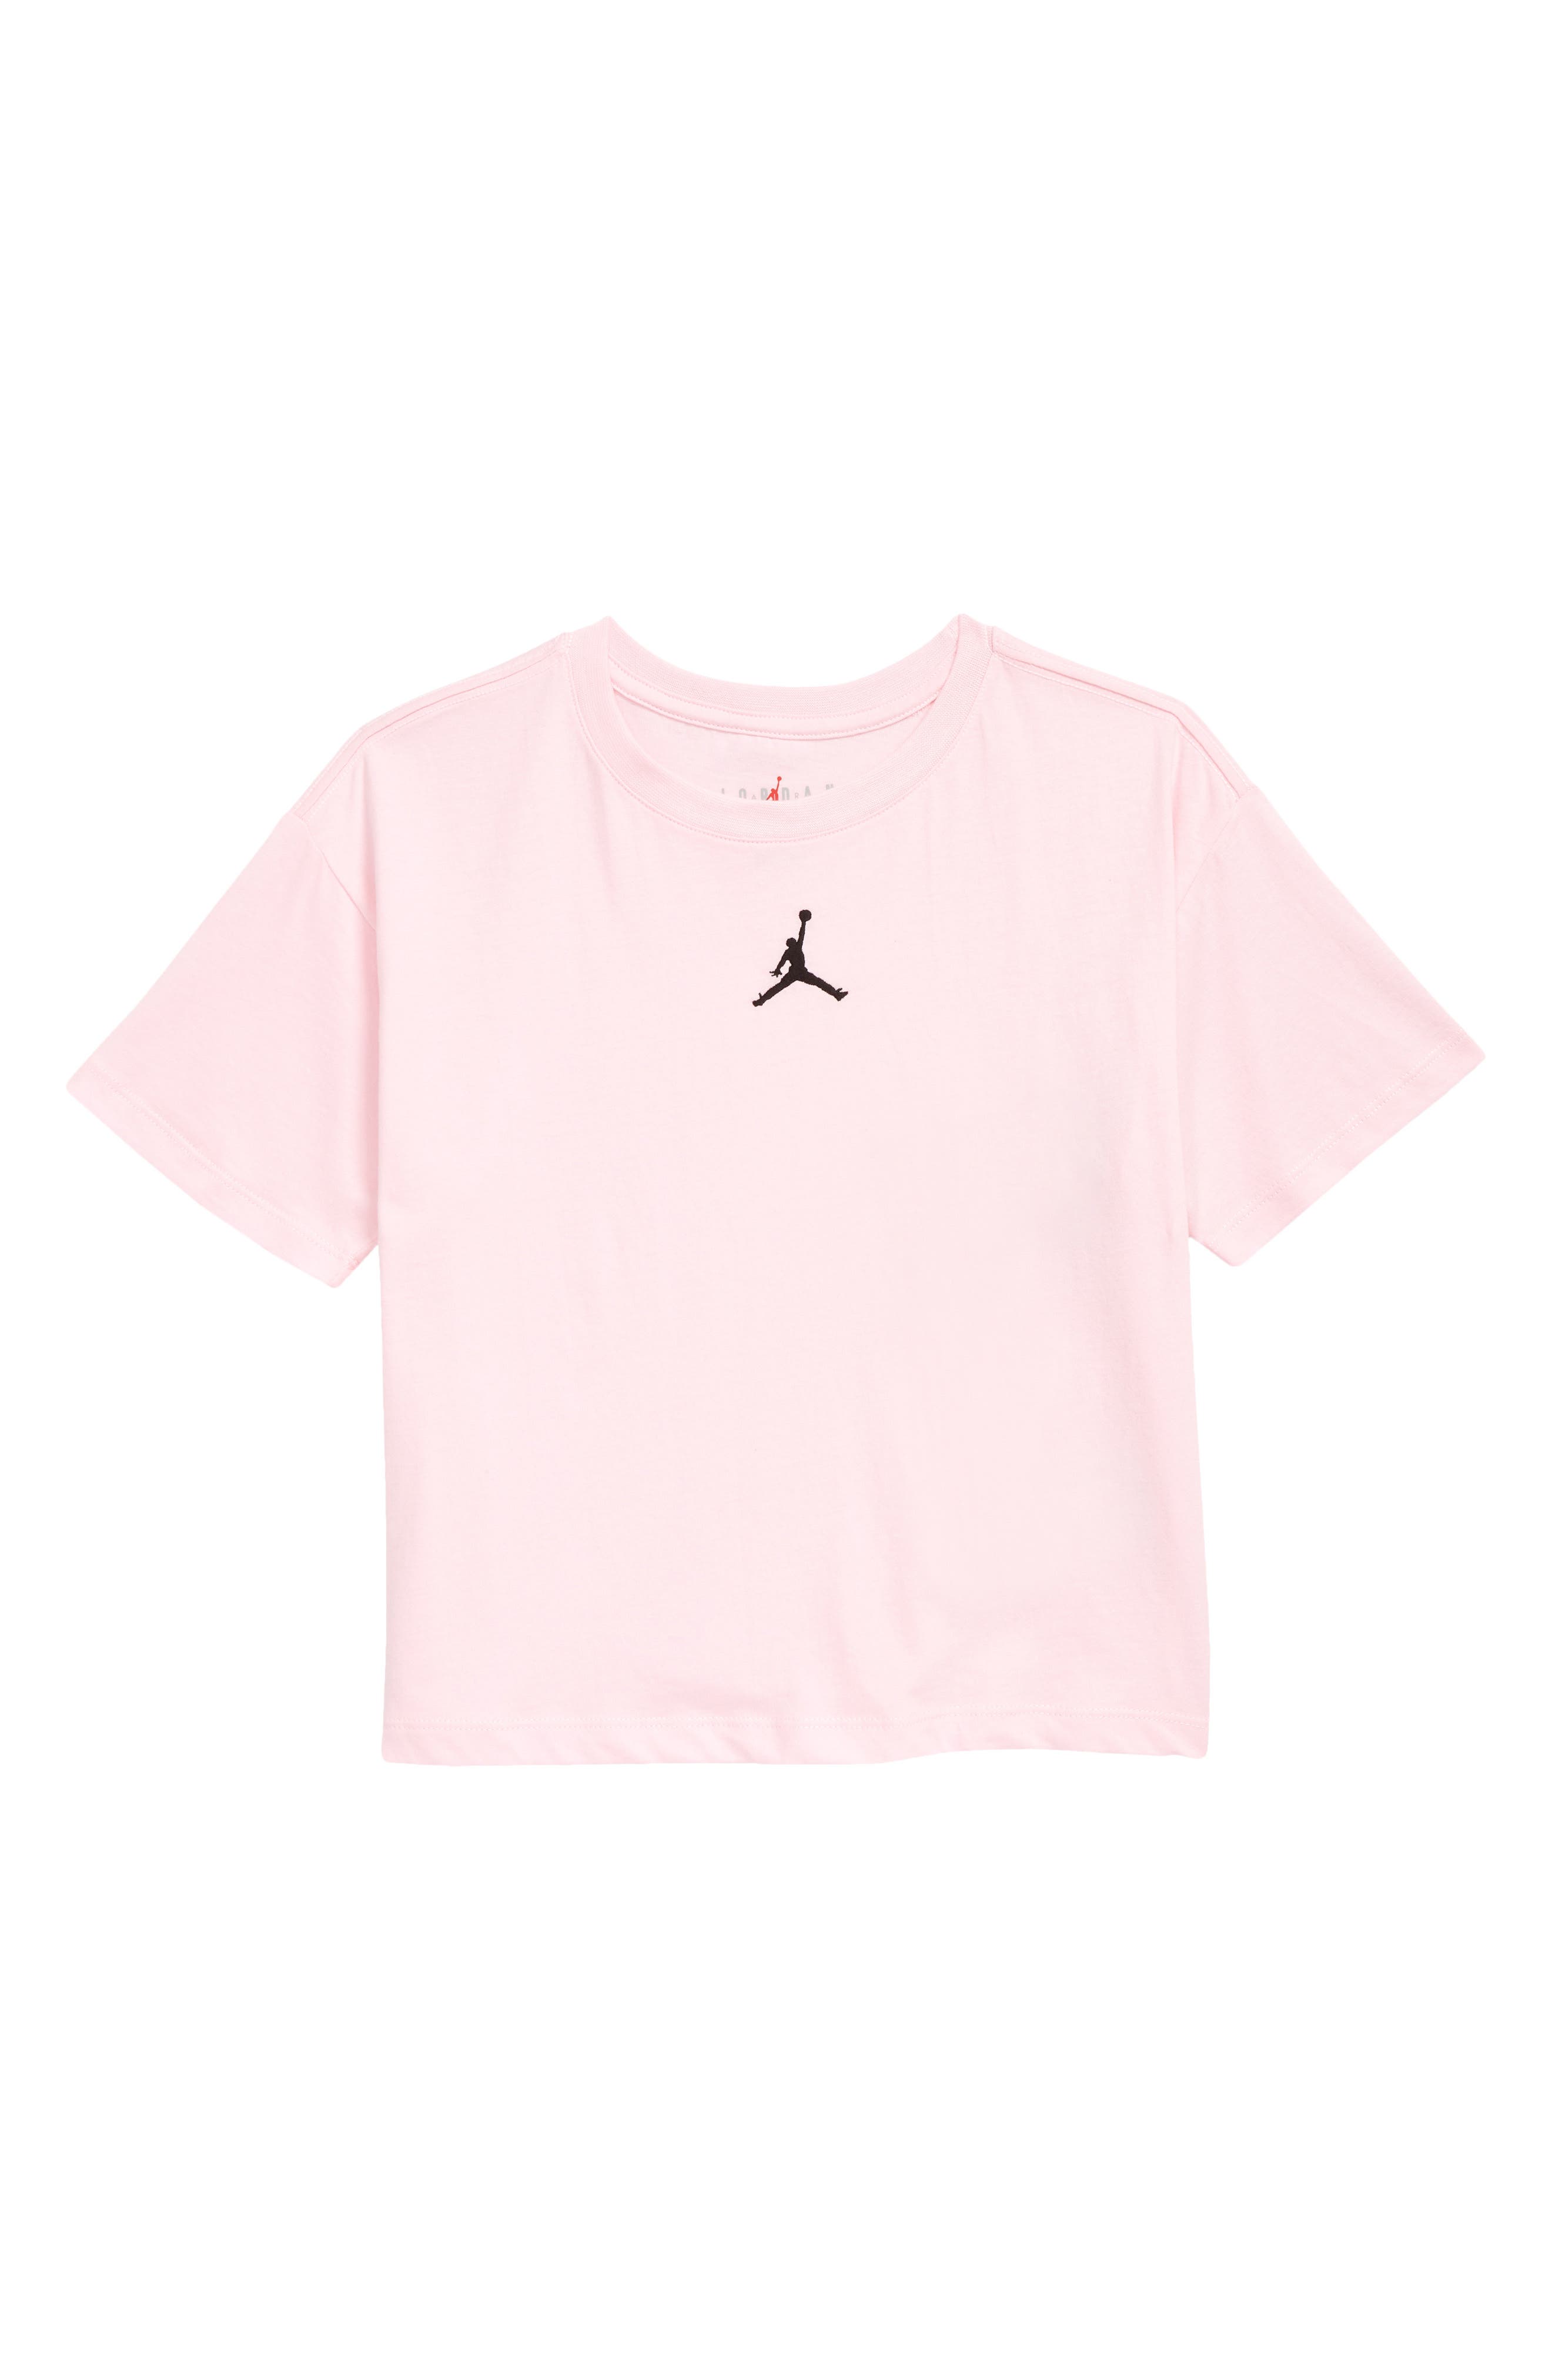 Kids T Shirts Girls Pink rosy tops High quality Sweatshirt Age 2-14 Years BNWT 